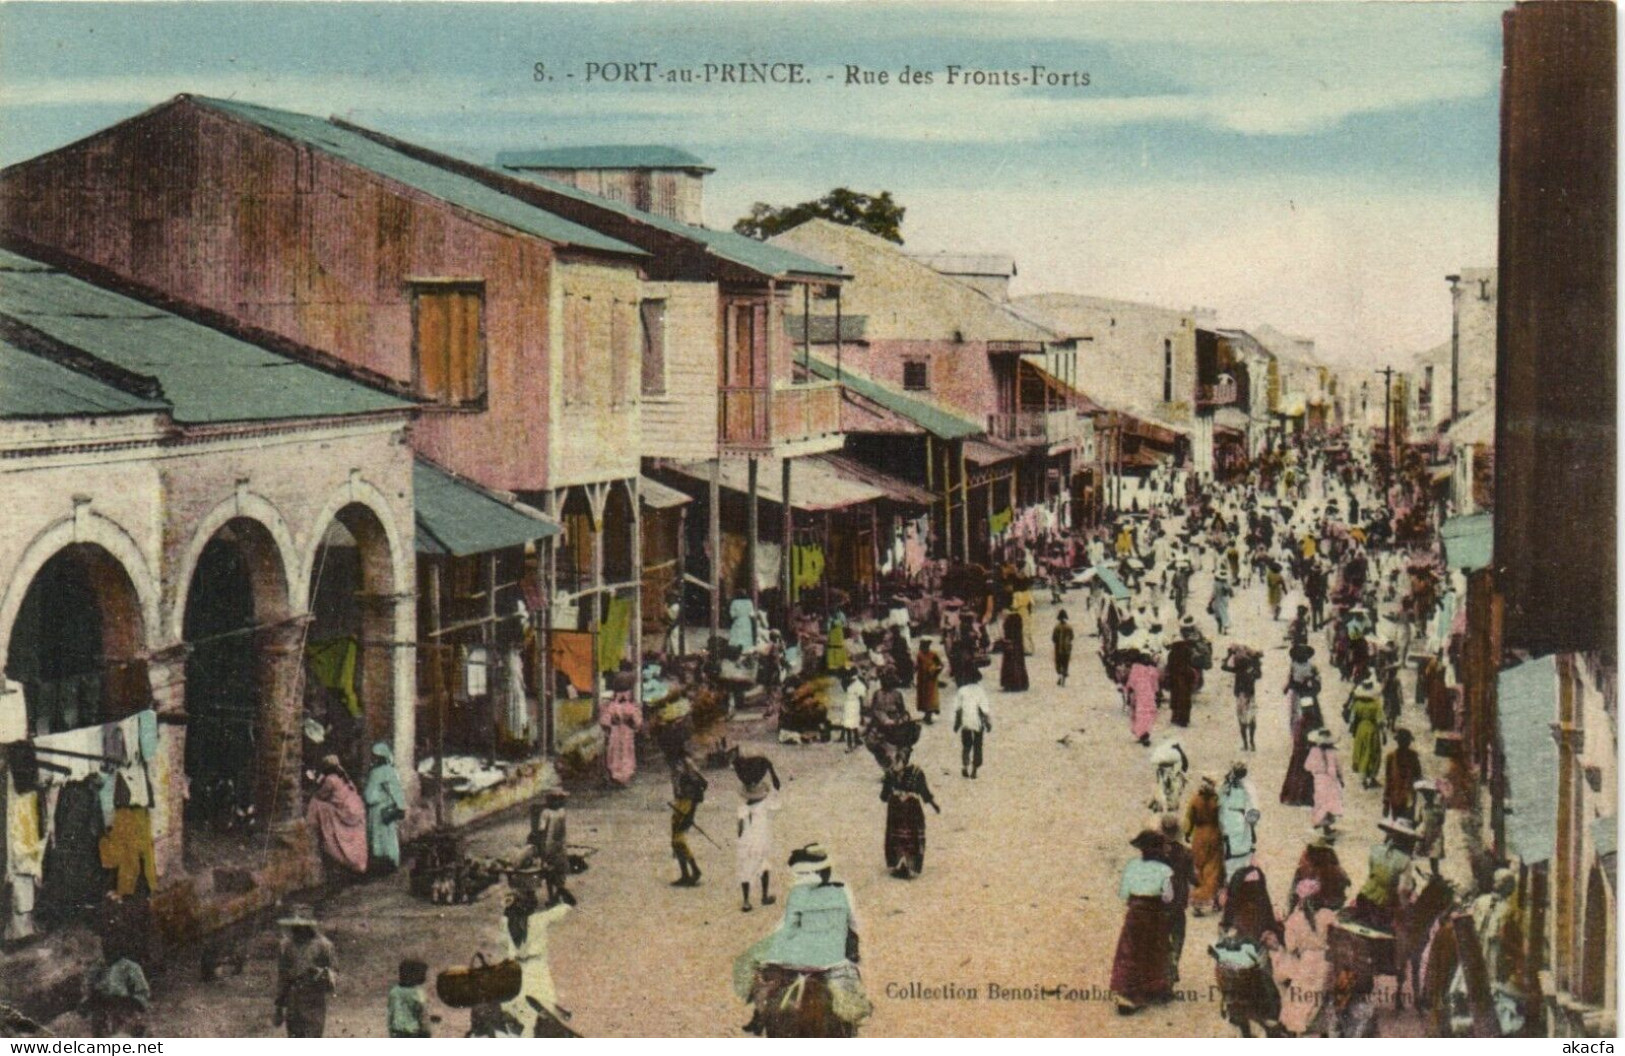 PC HAITI CARIBBEAN PORT-au-PRINCE RUE DES FRONTS-FORTS Vintage Postcard (b52088) - Haïti